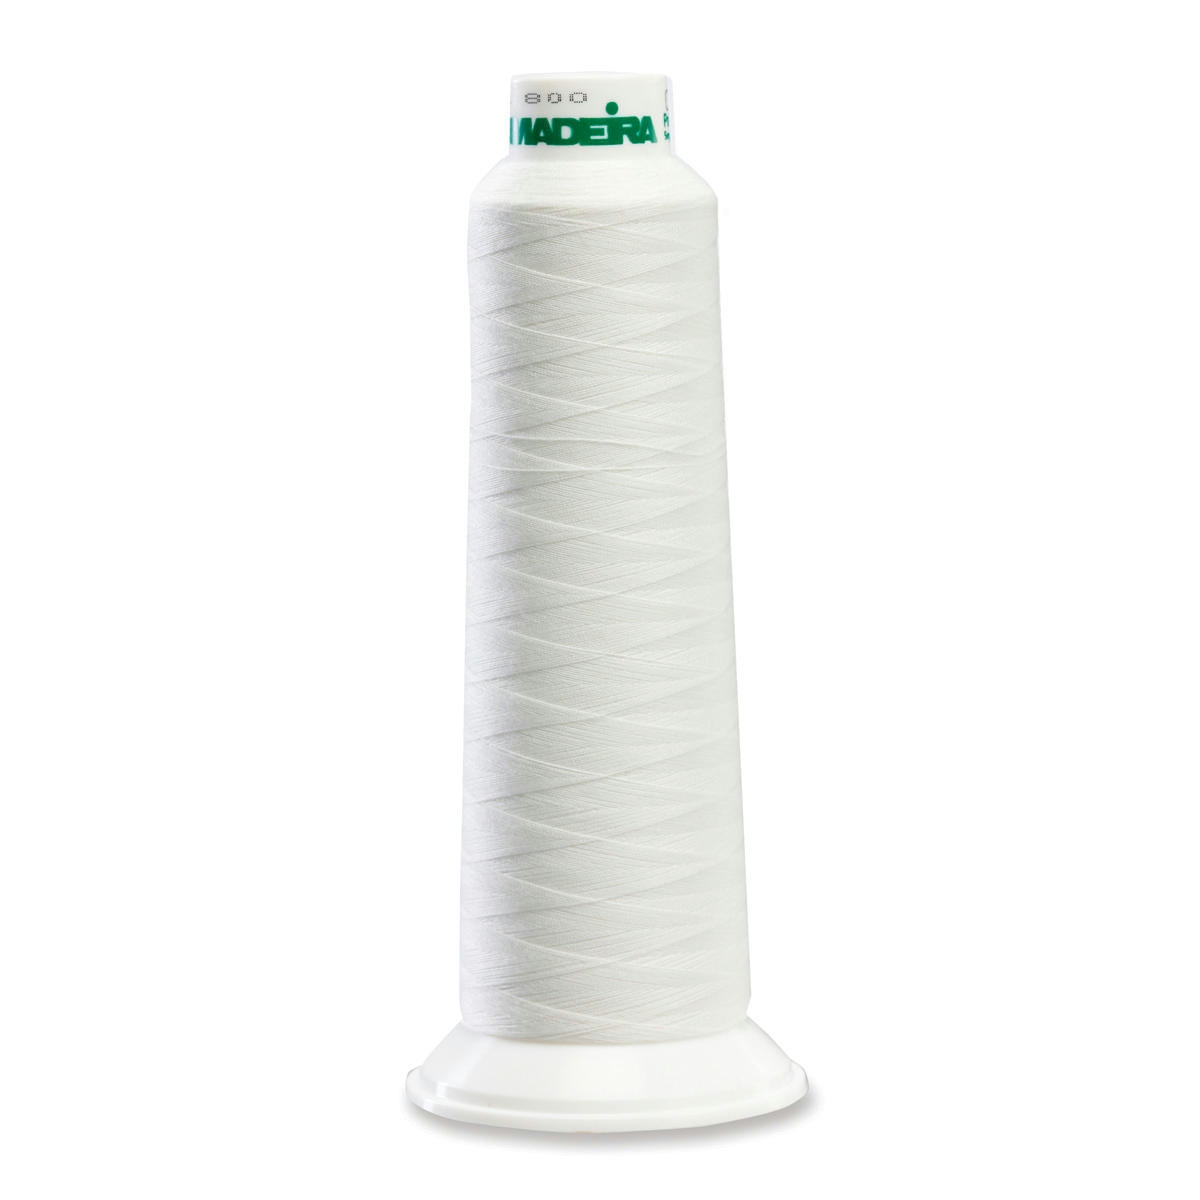 Madeira Aerolock Premium Serger Thread 2000 Yard Cone - WHITE